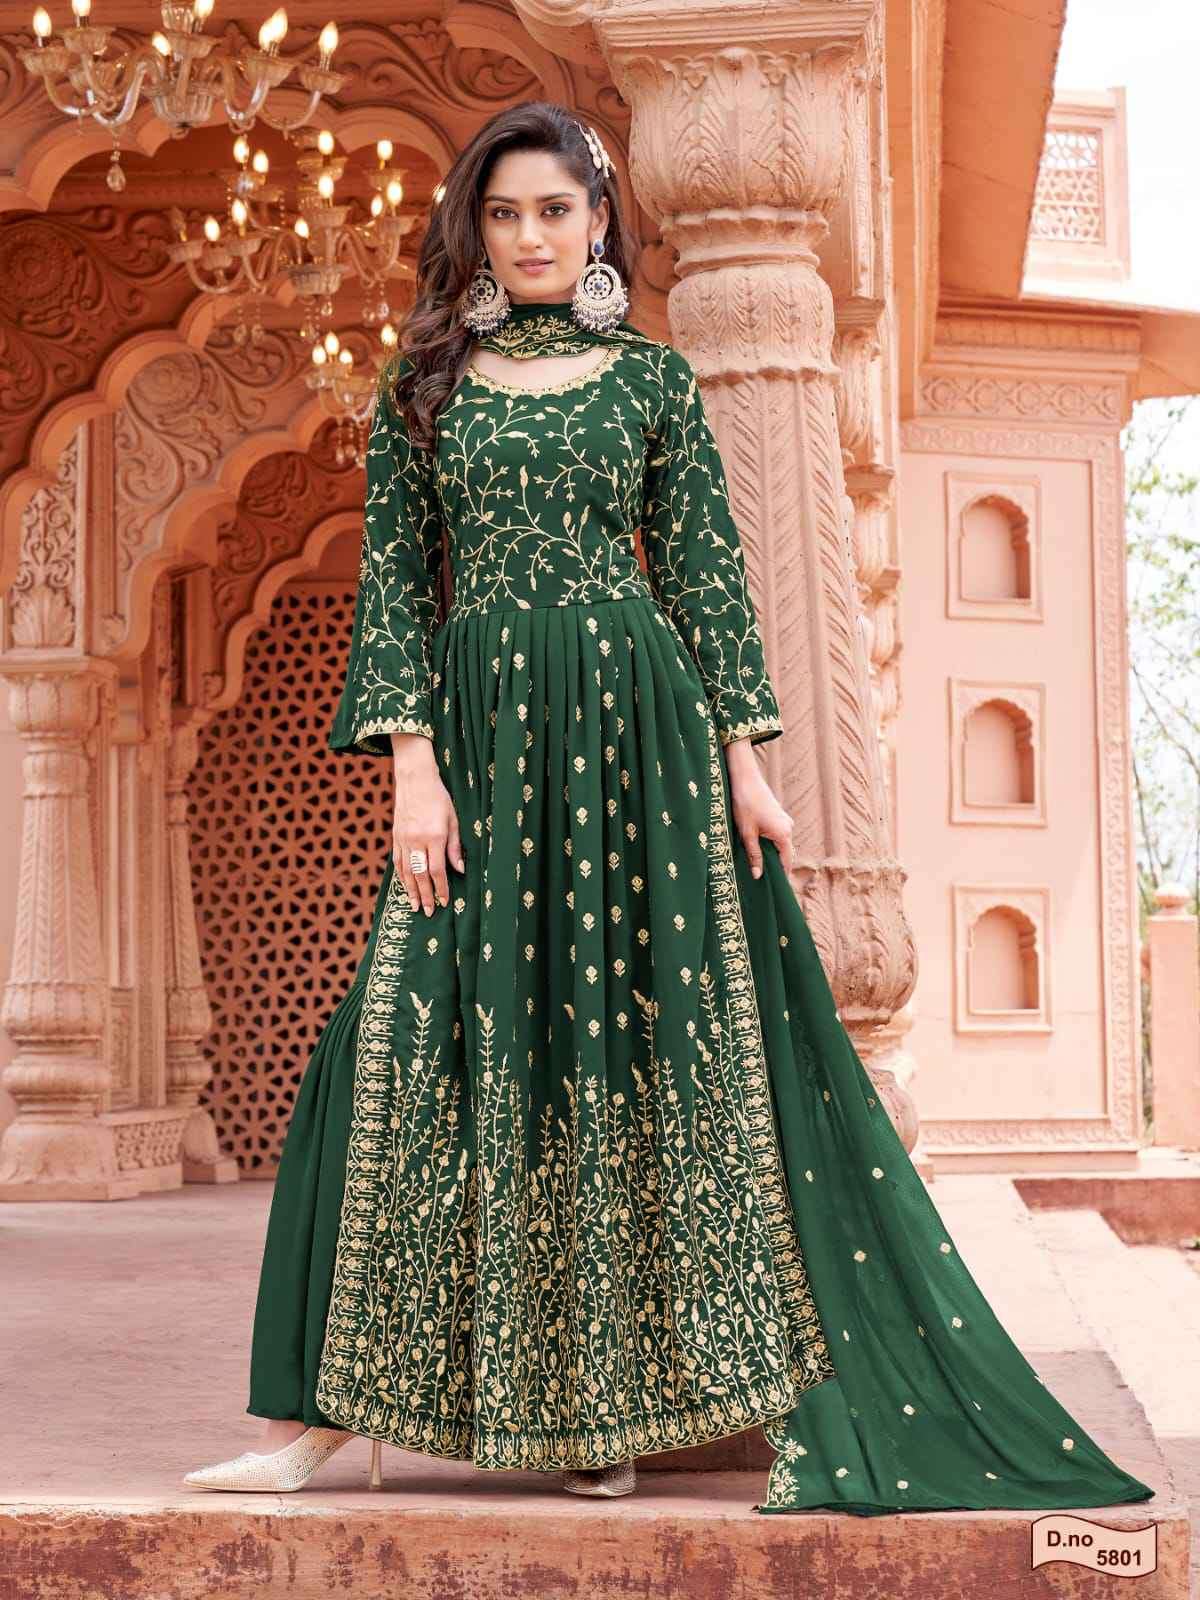 Aanaya Vol 105 Designer party Wear Anarkali Suit new Designs With price